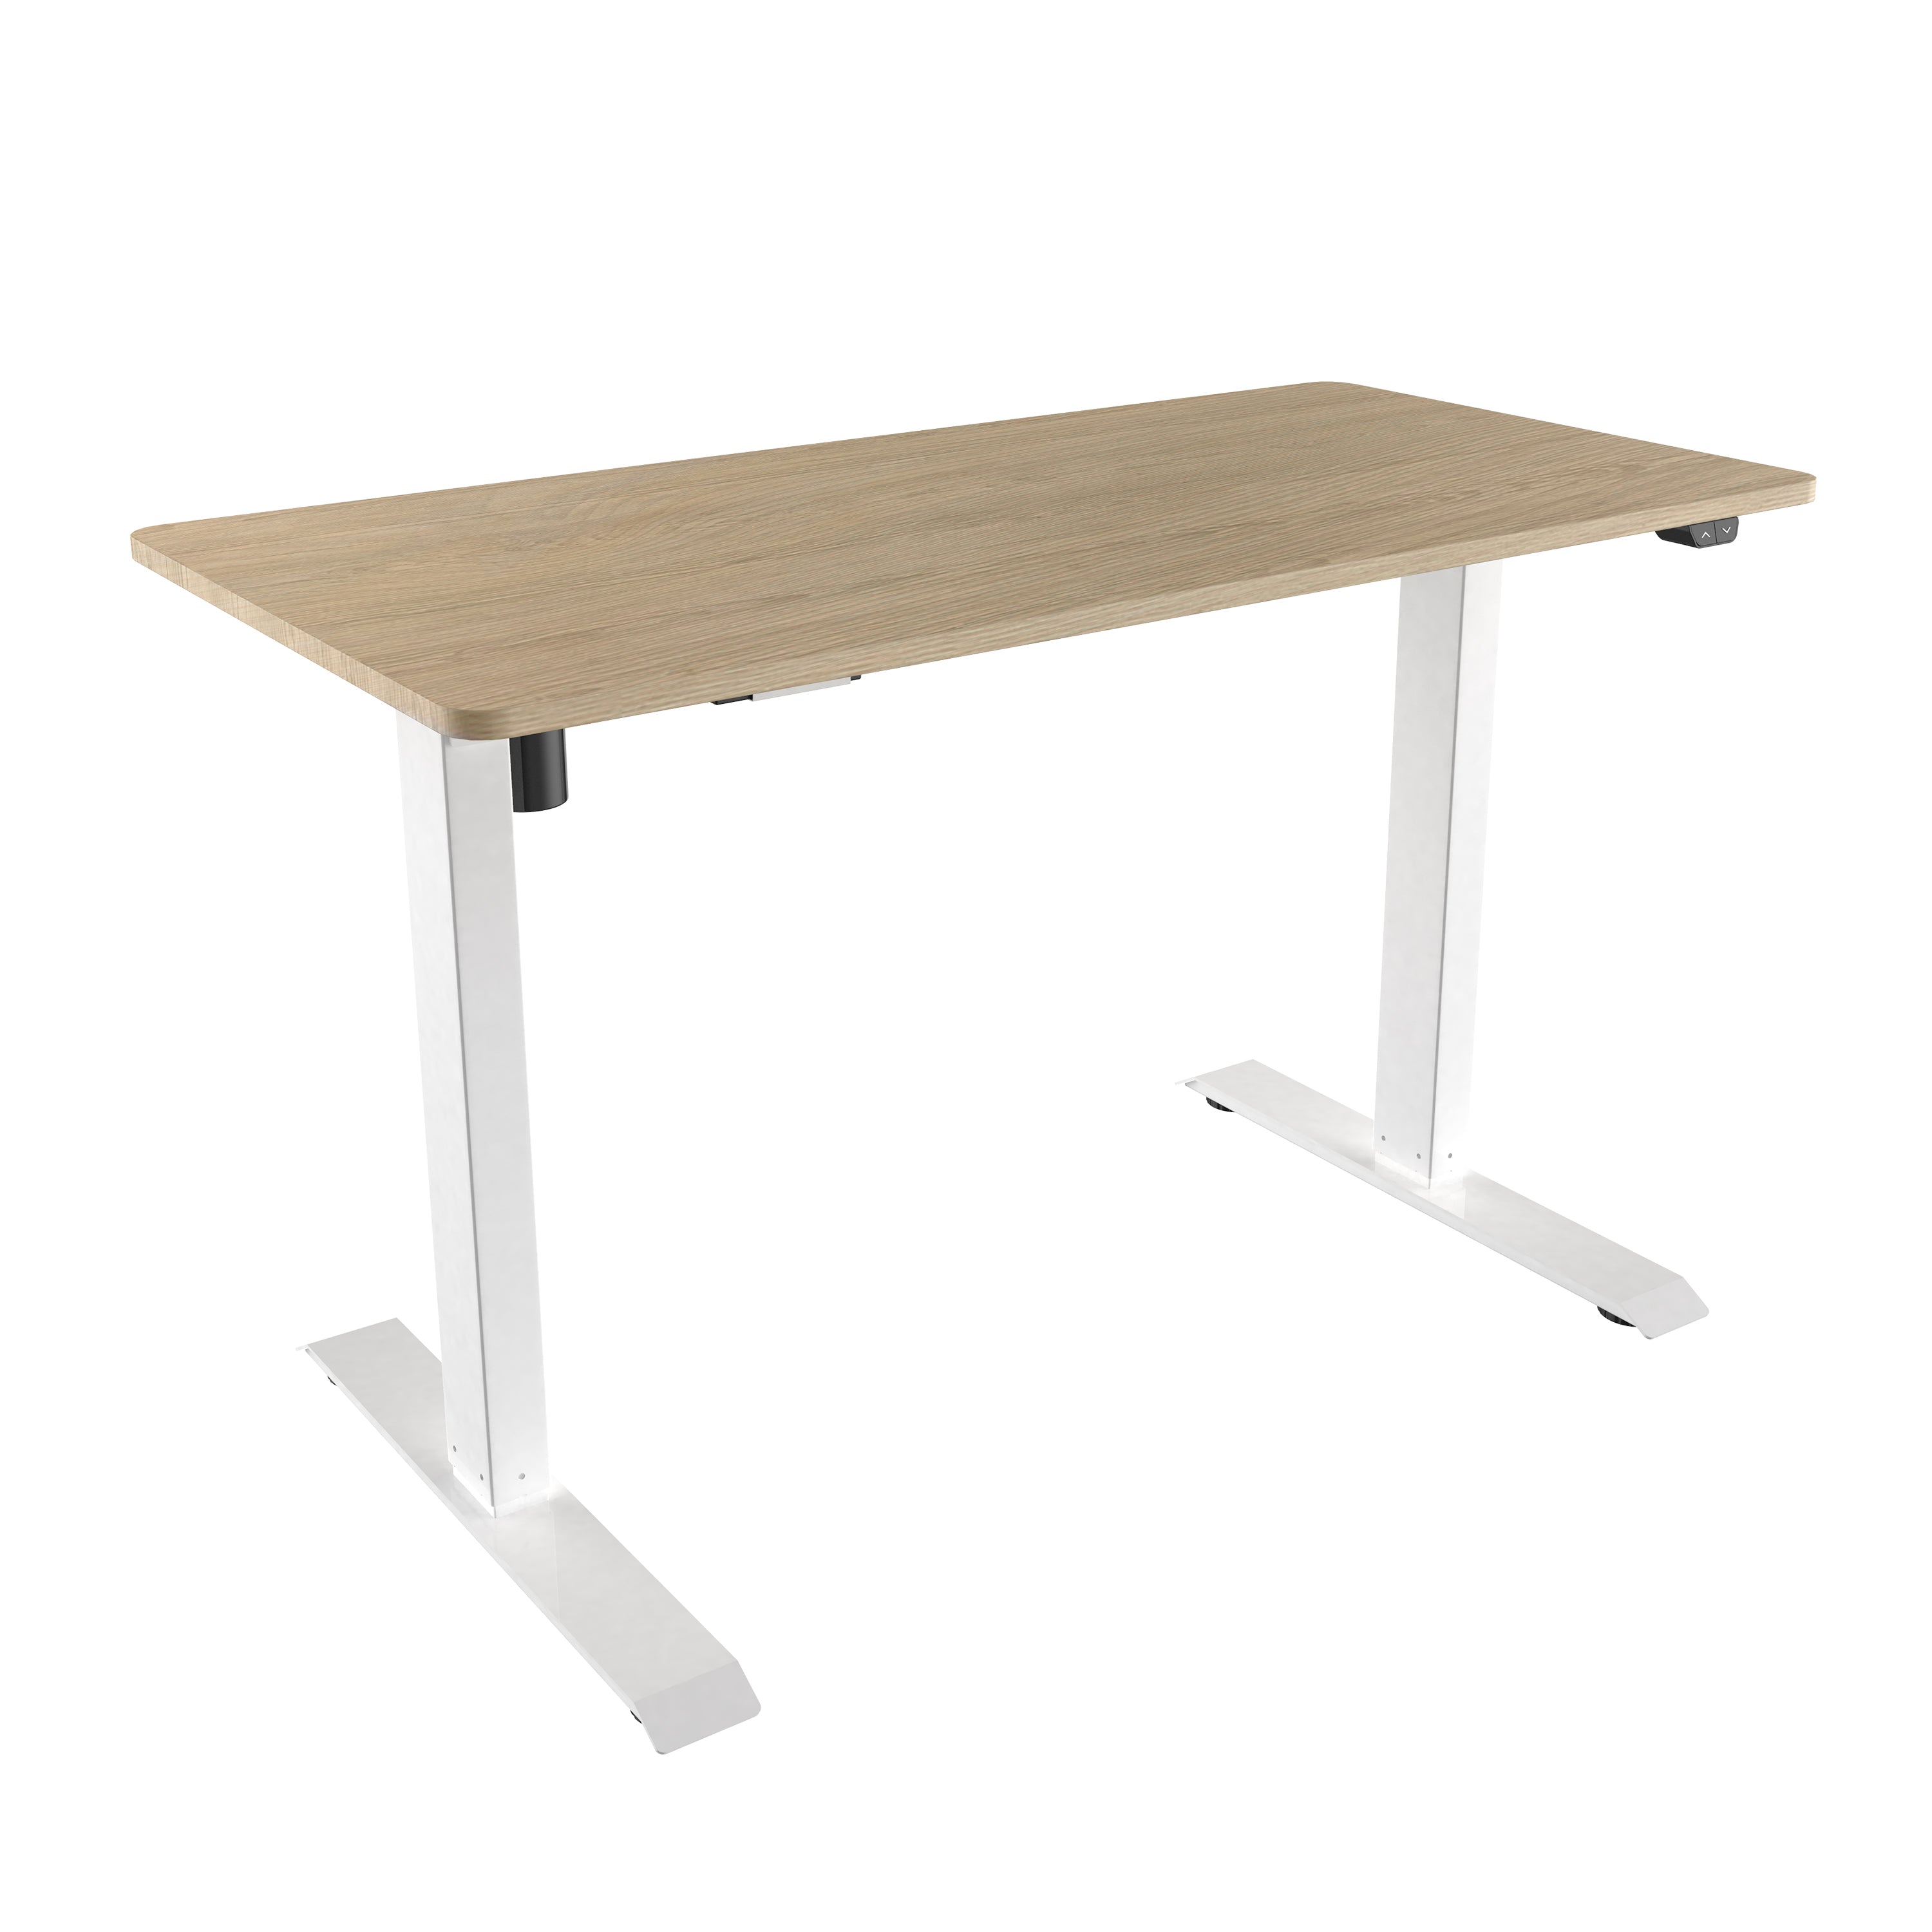 Adjustable Sit to Stand Desk